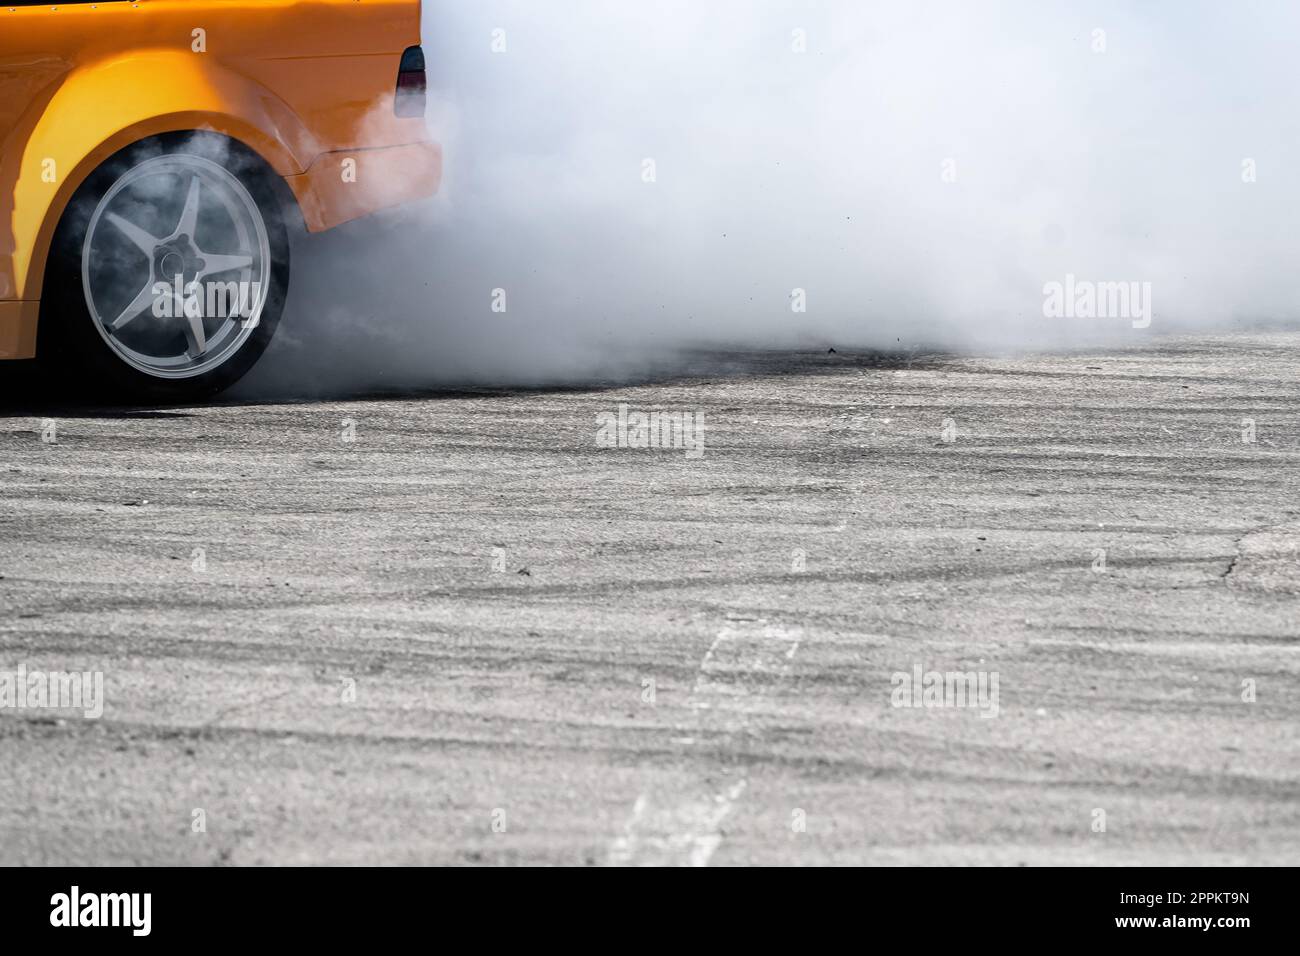 Premium Photo, Top view drifting car, aerial view professional driver  drifting car on race track.